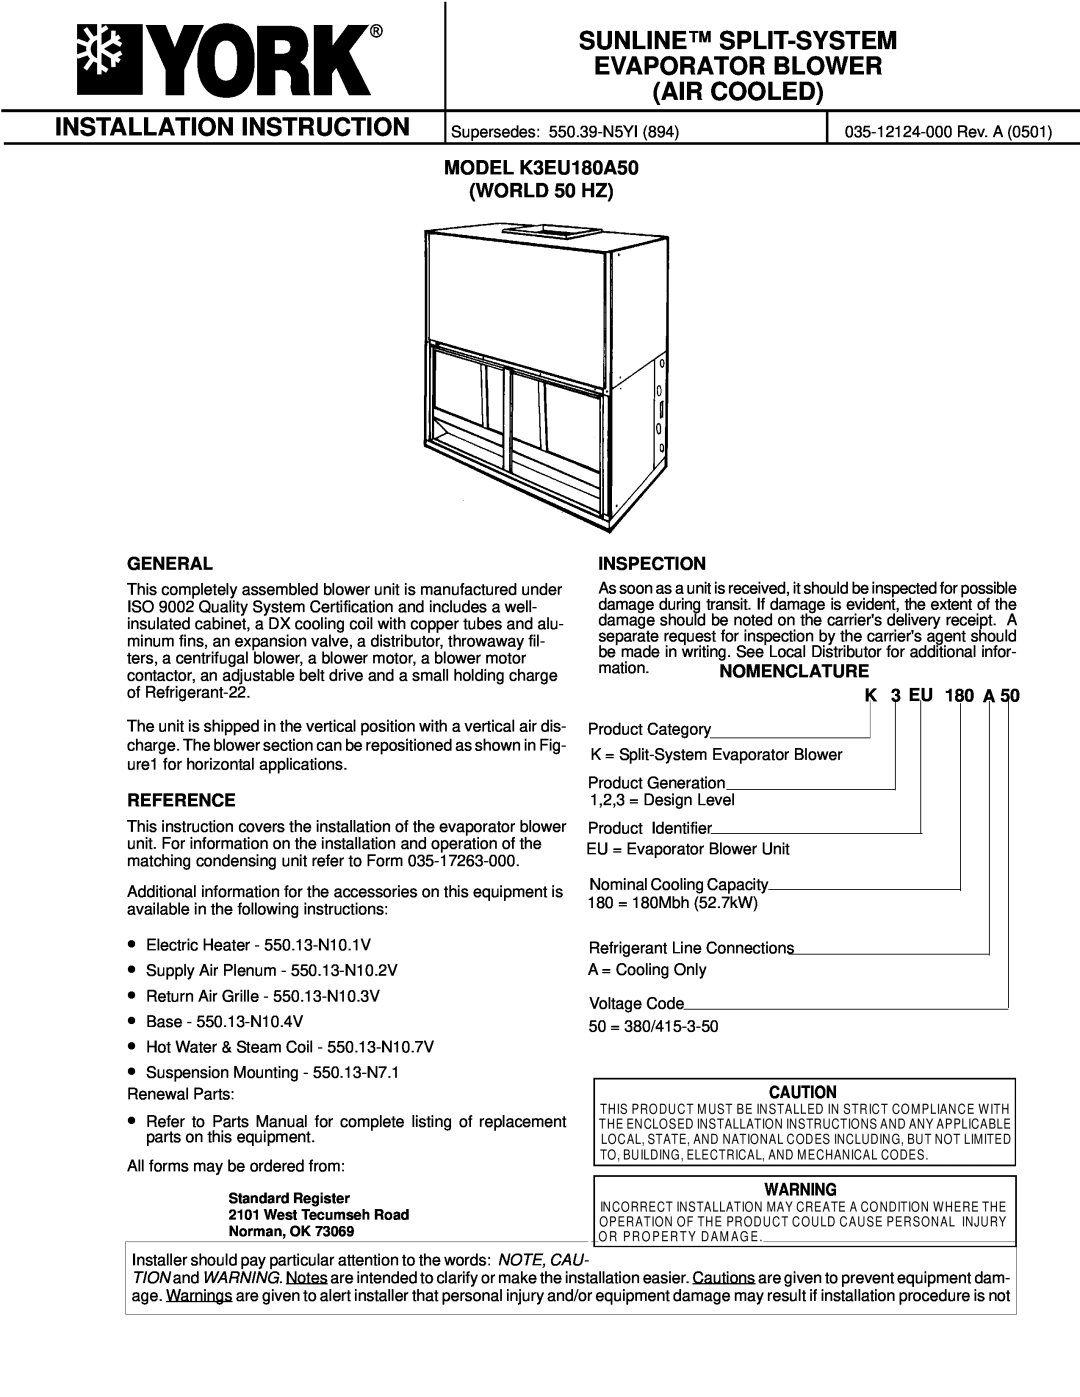 York K3EU180A50 installation instructions Sunline Split-System, General, Reference, Inspection, Evaporator Blower 